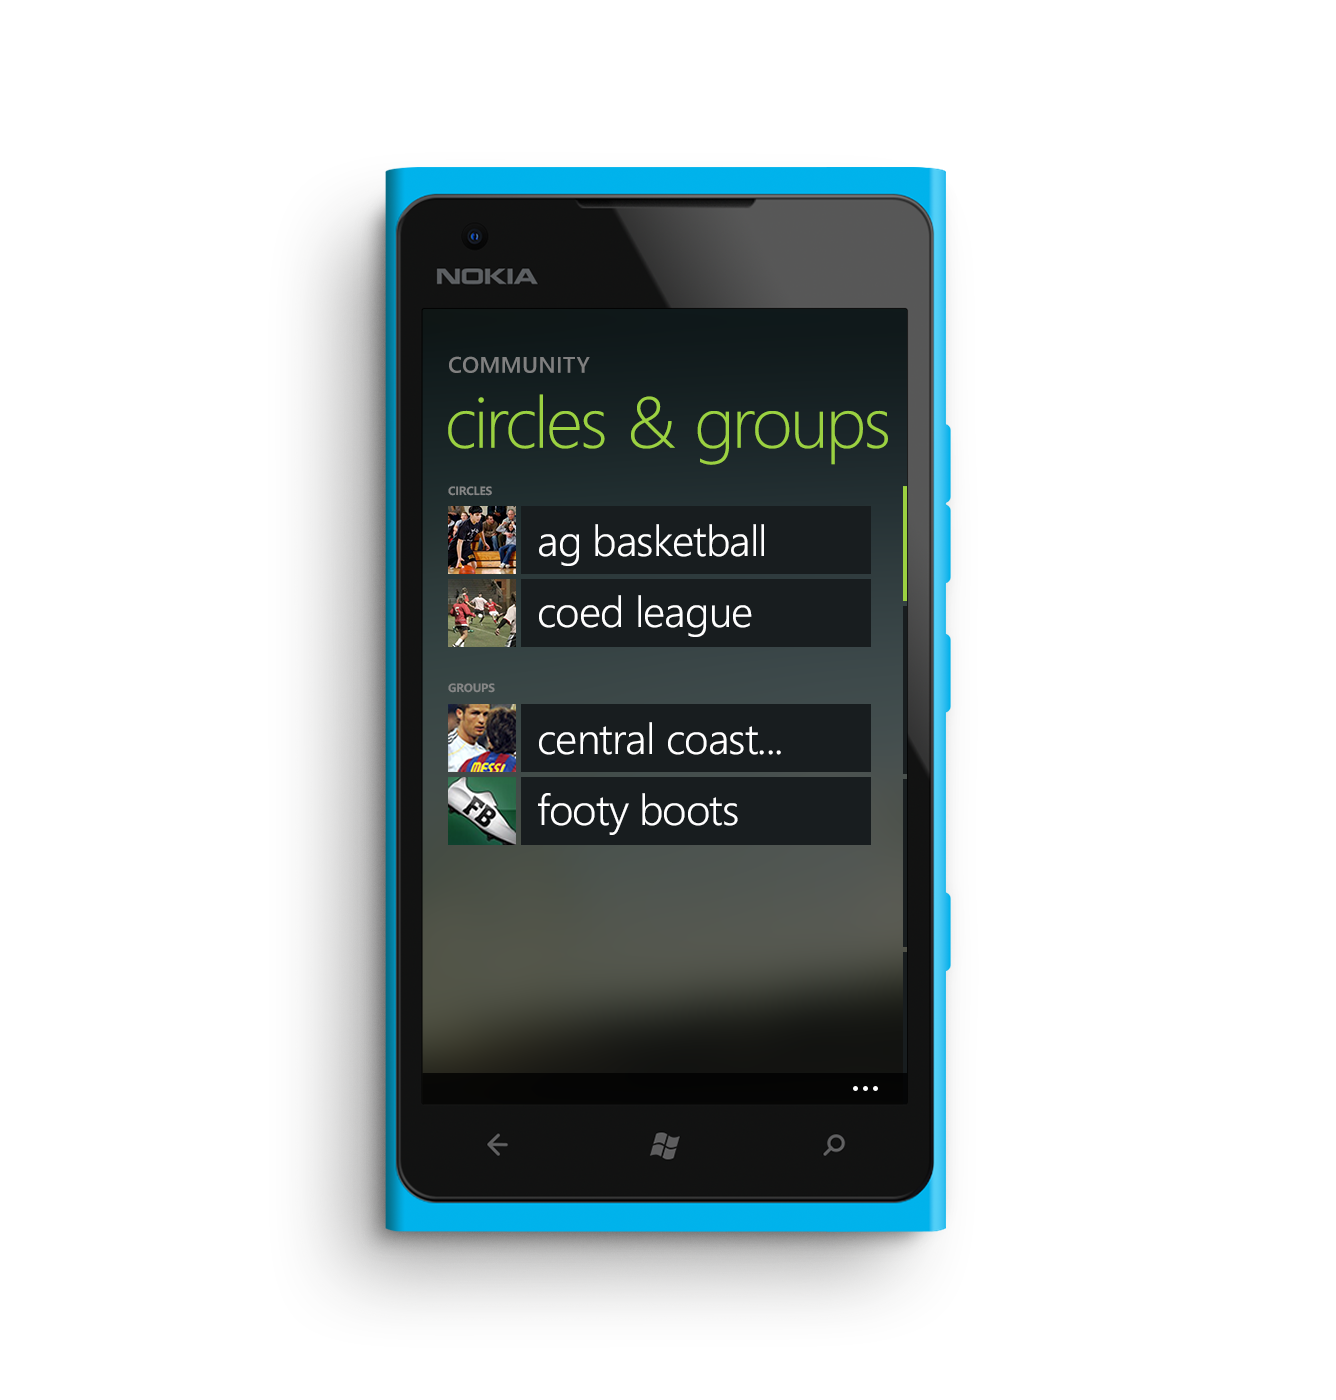 Nokia Adidas miCoach interface design Circles & Groups